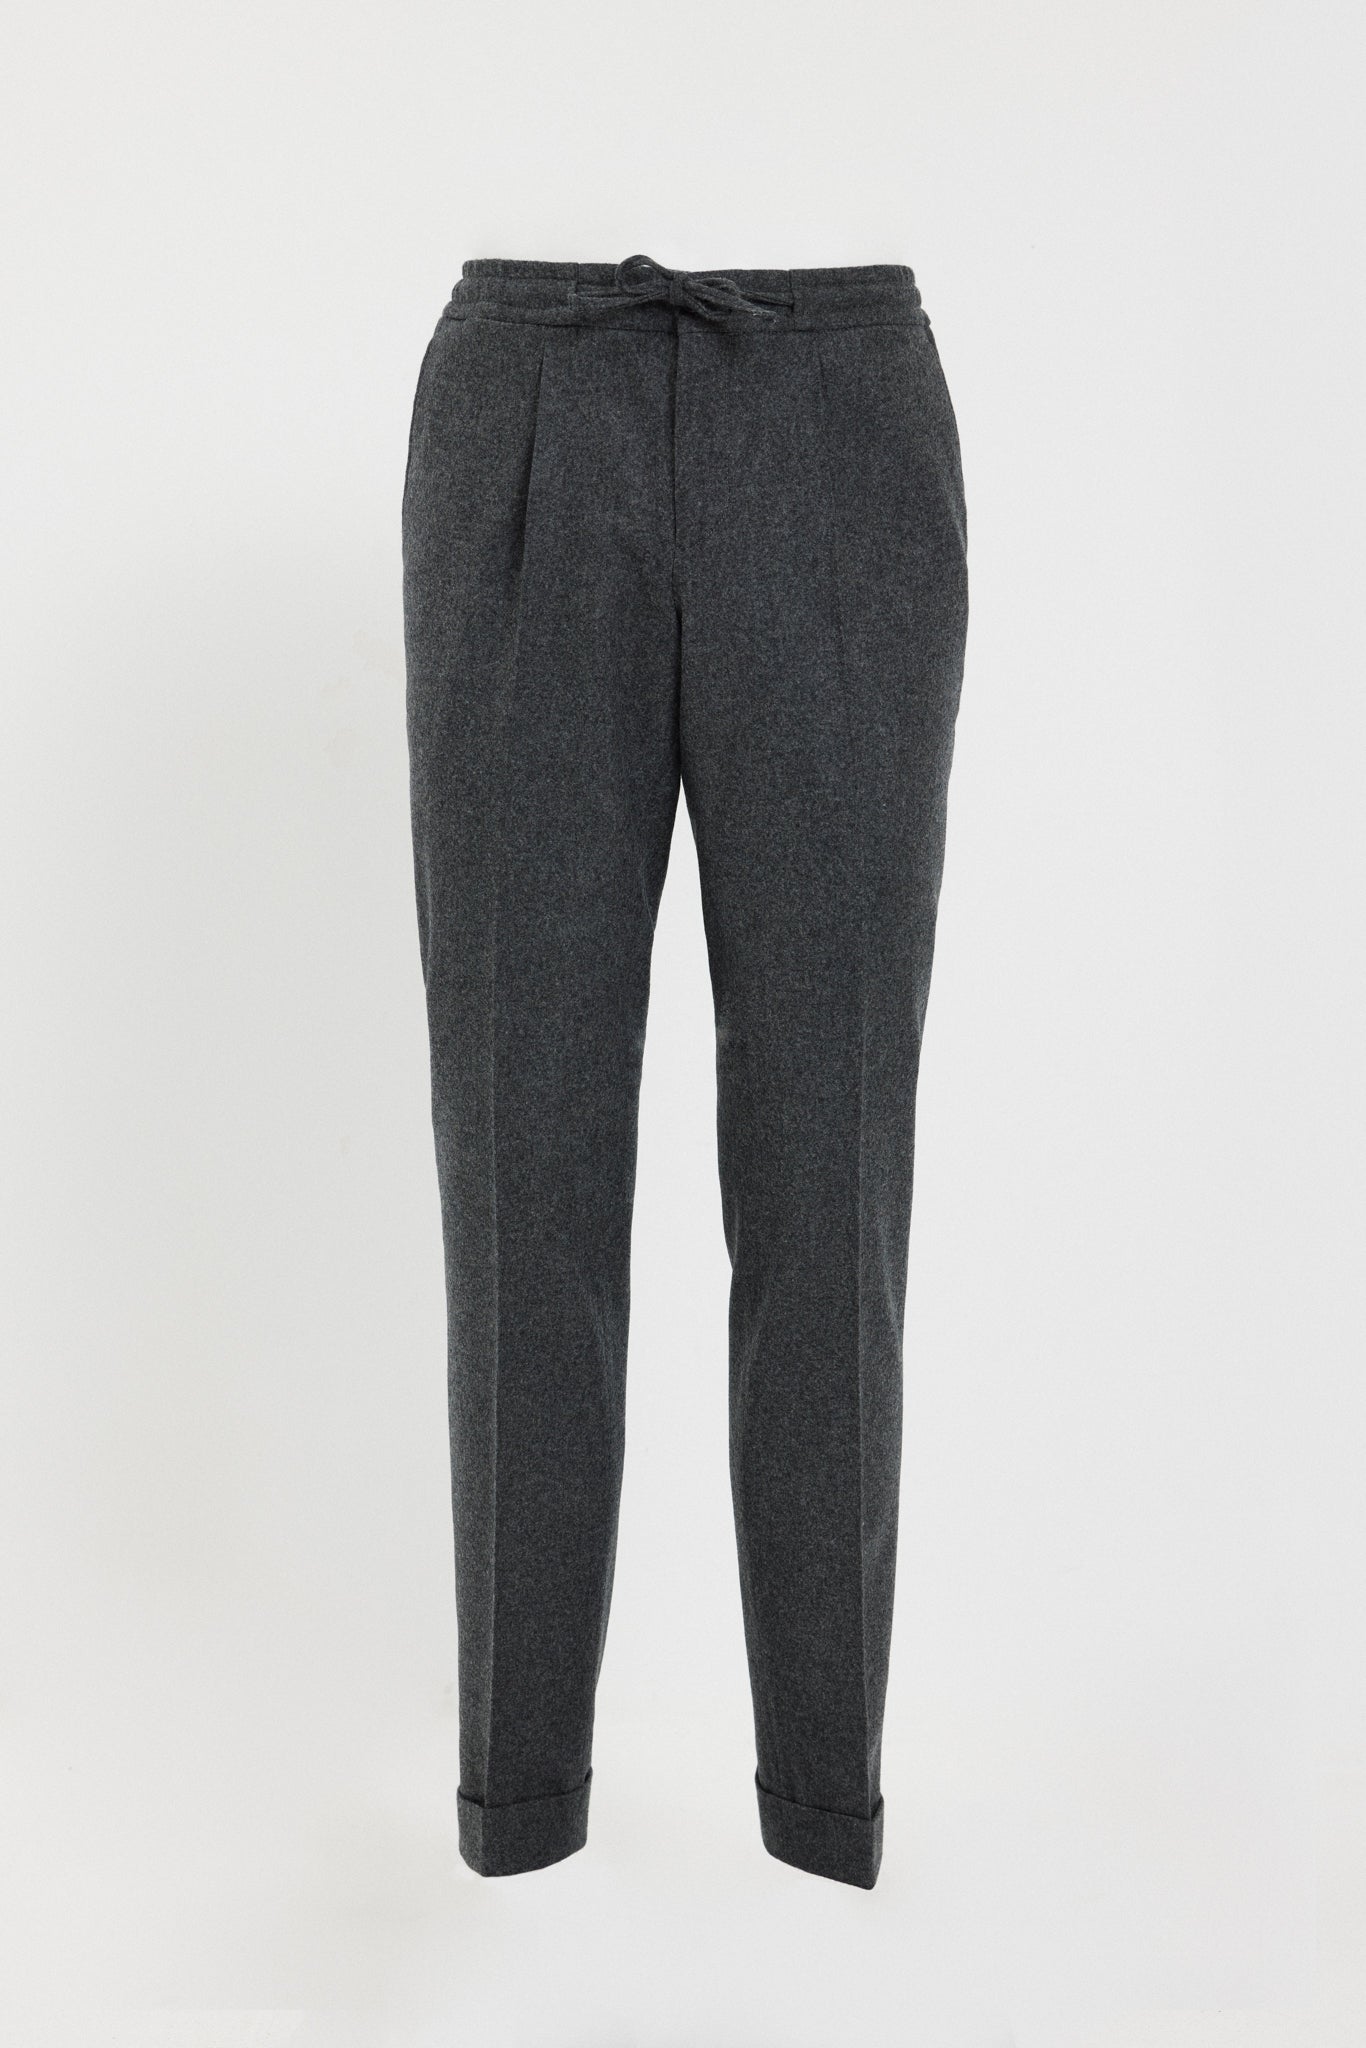 Grey Drawstring Trousers